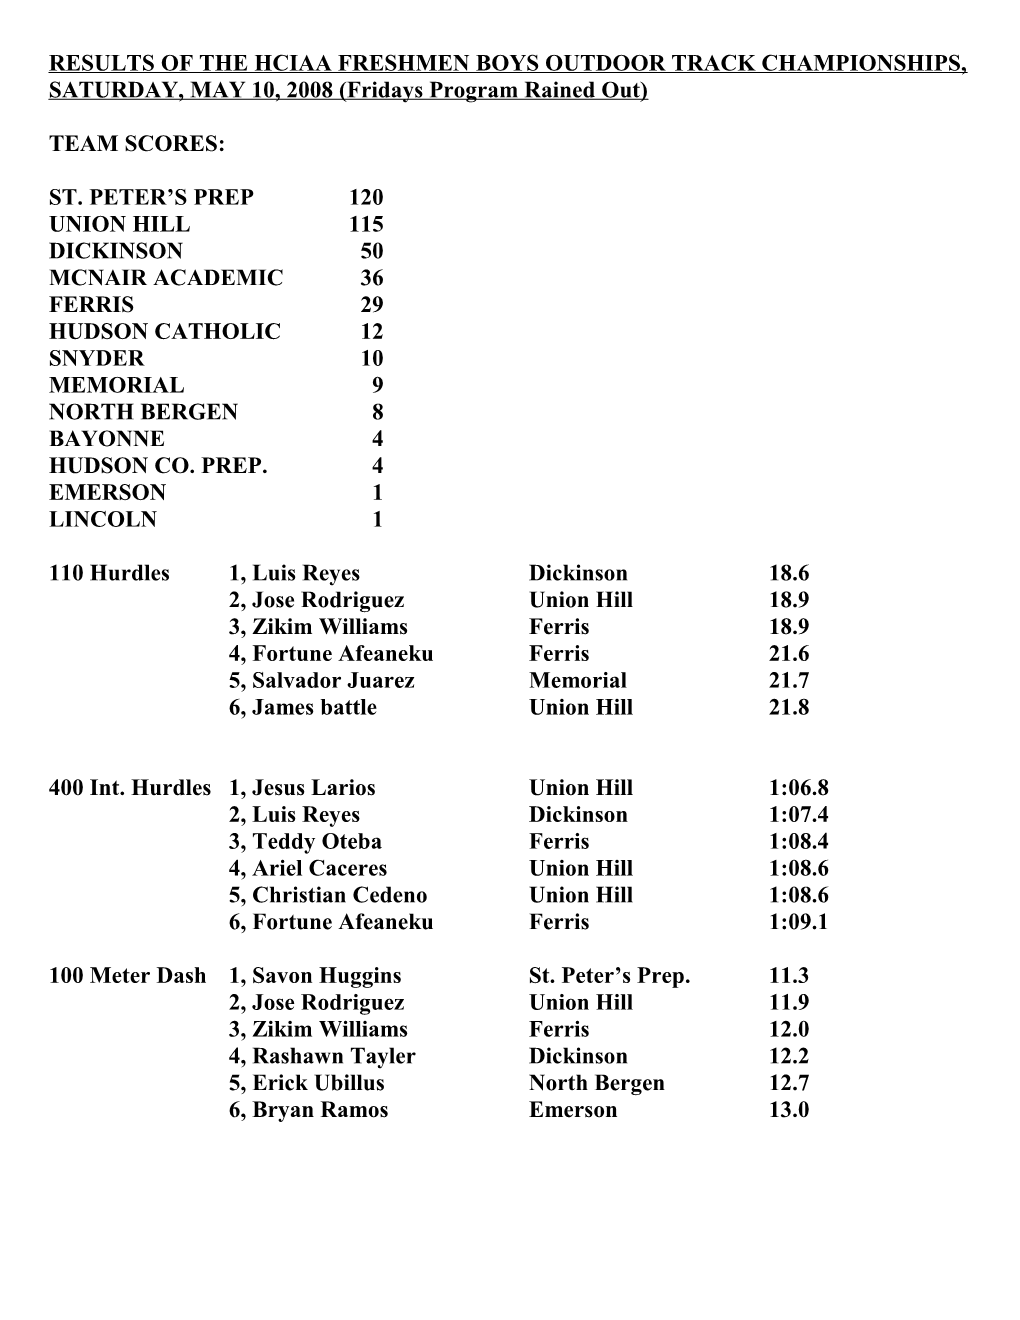 Results of the Hciaa Freshmen Boys Track Championships, Friday, May 7 & Saturday, May 8, 2004